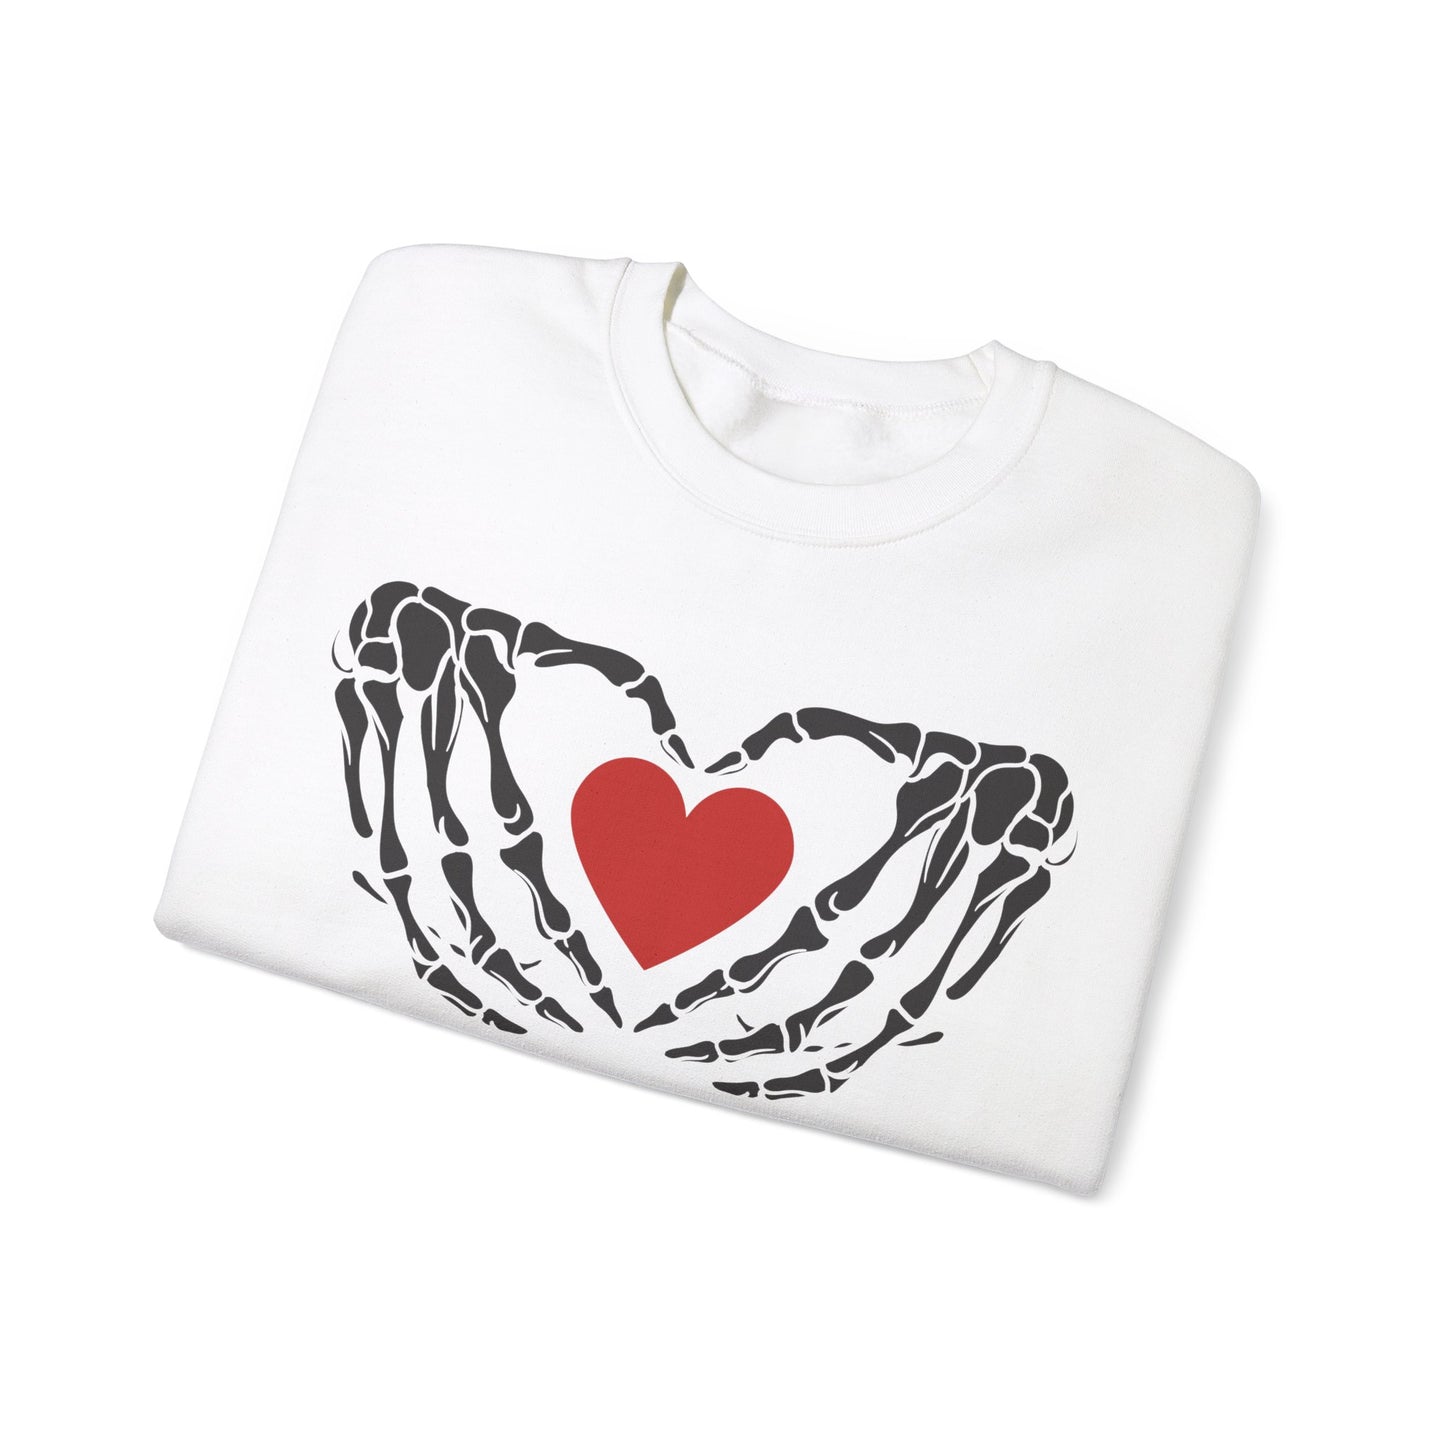 Skeleton Hands Heart valentine shirt